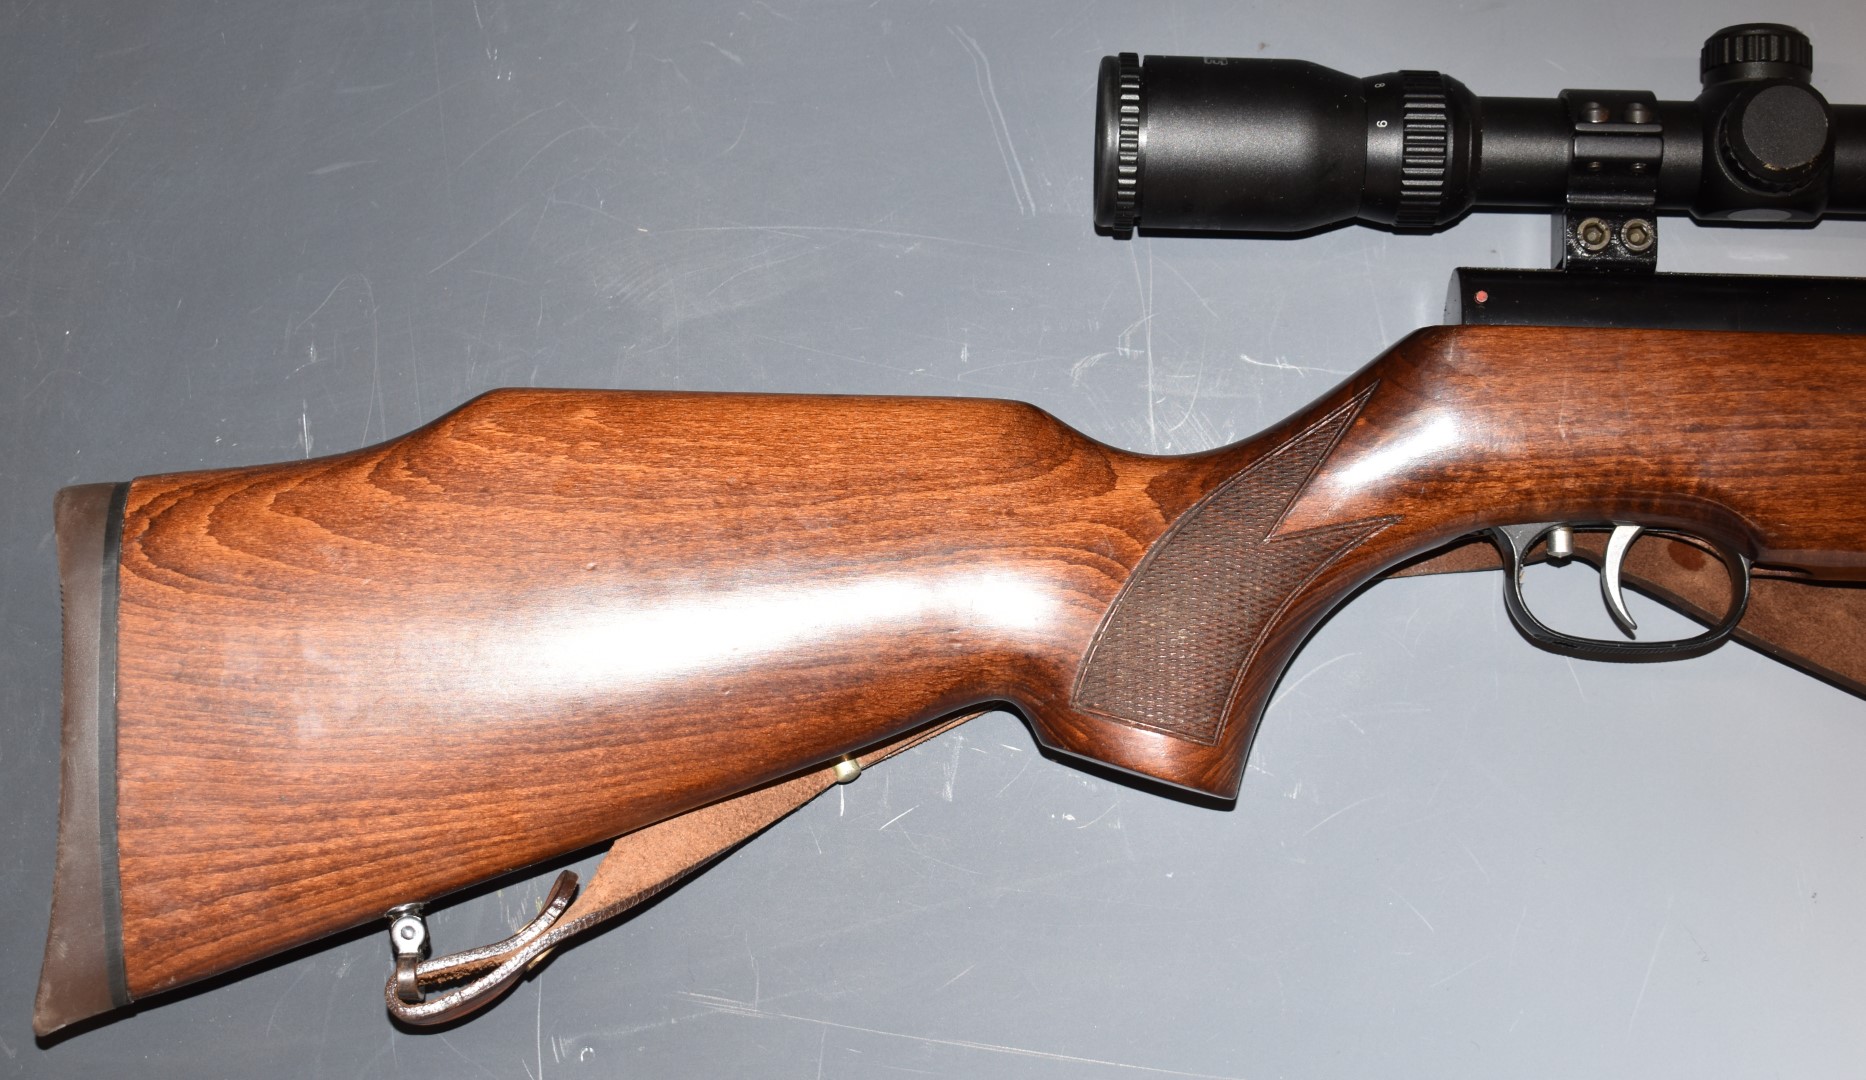 Weihrauch HW80K .22 air rifle with chequered semi-pistol grip, raised cheek piece, adjustable - Image 3 of 11